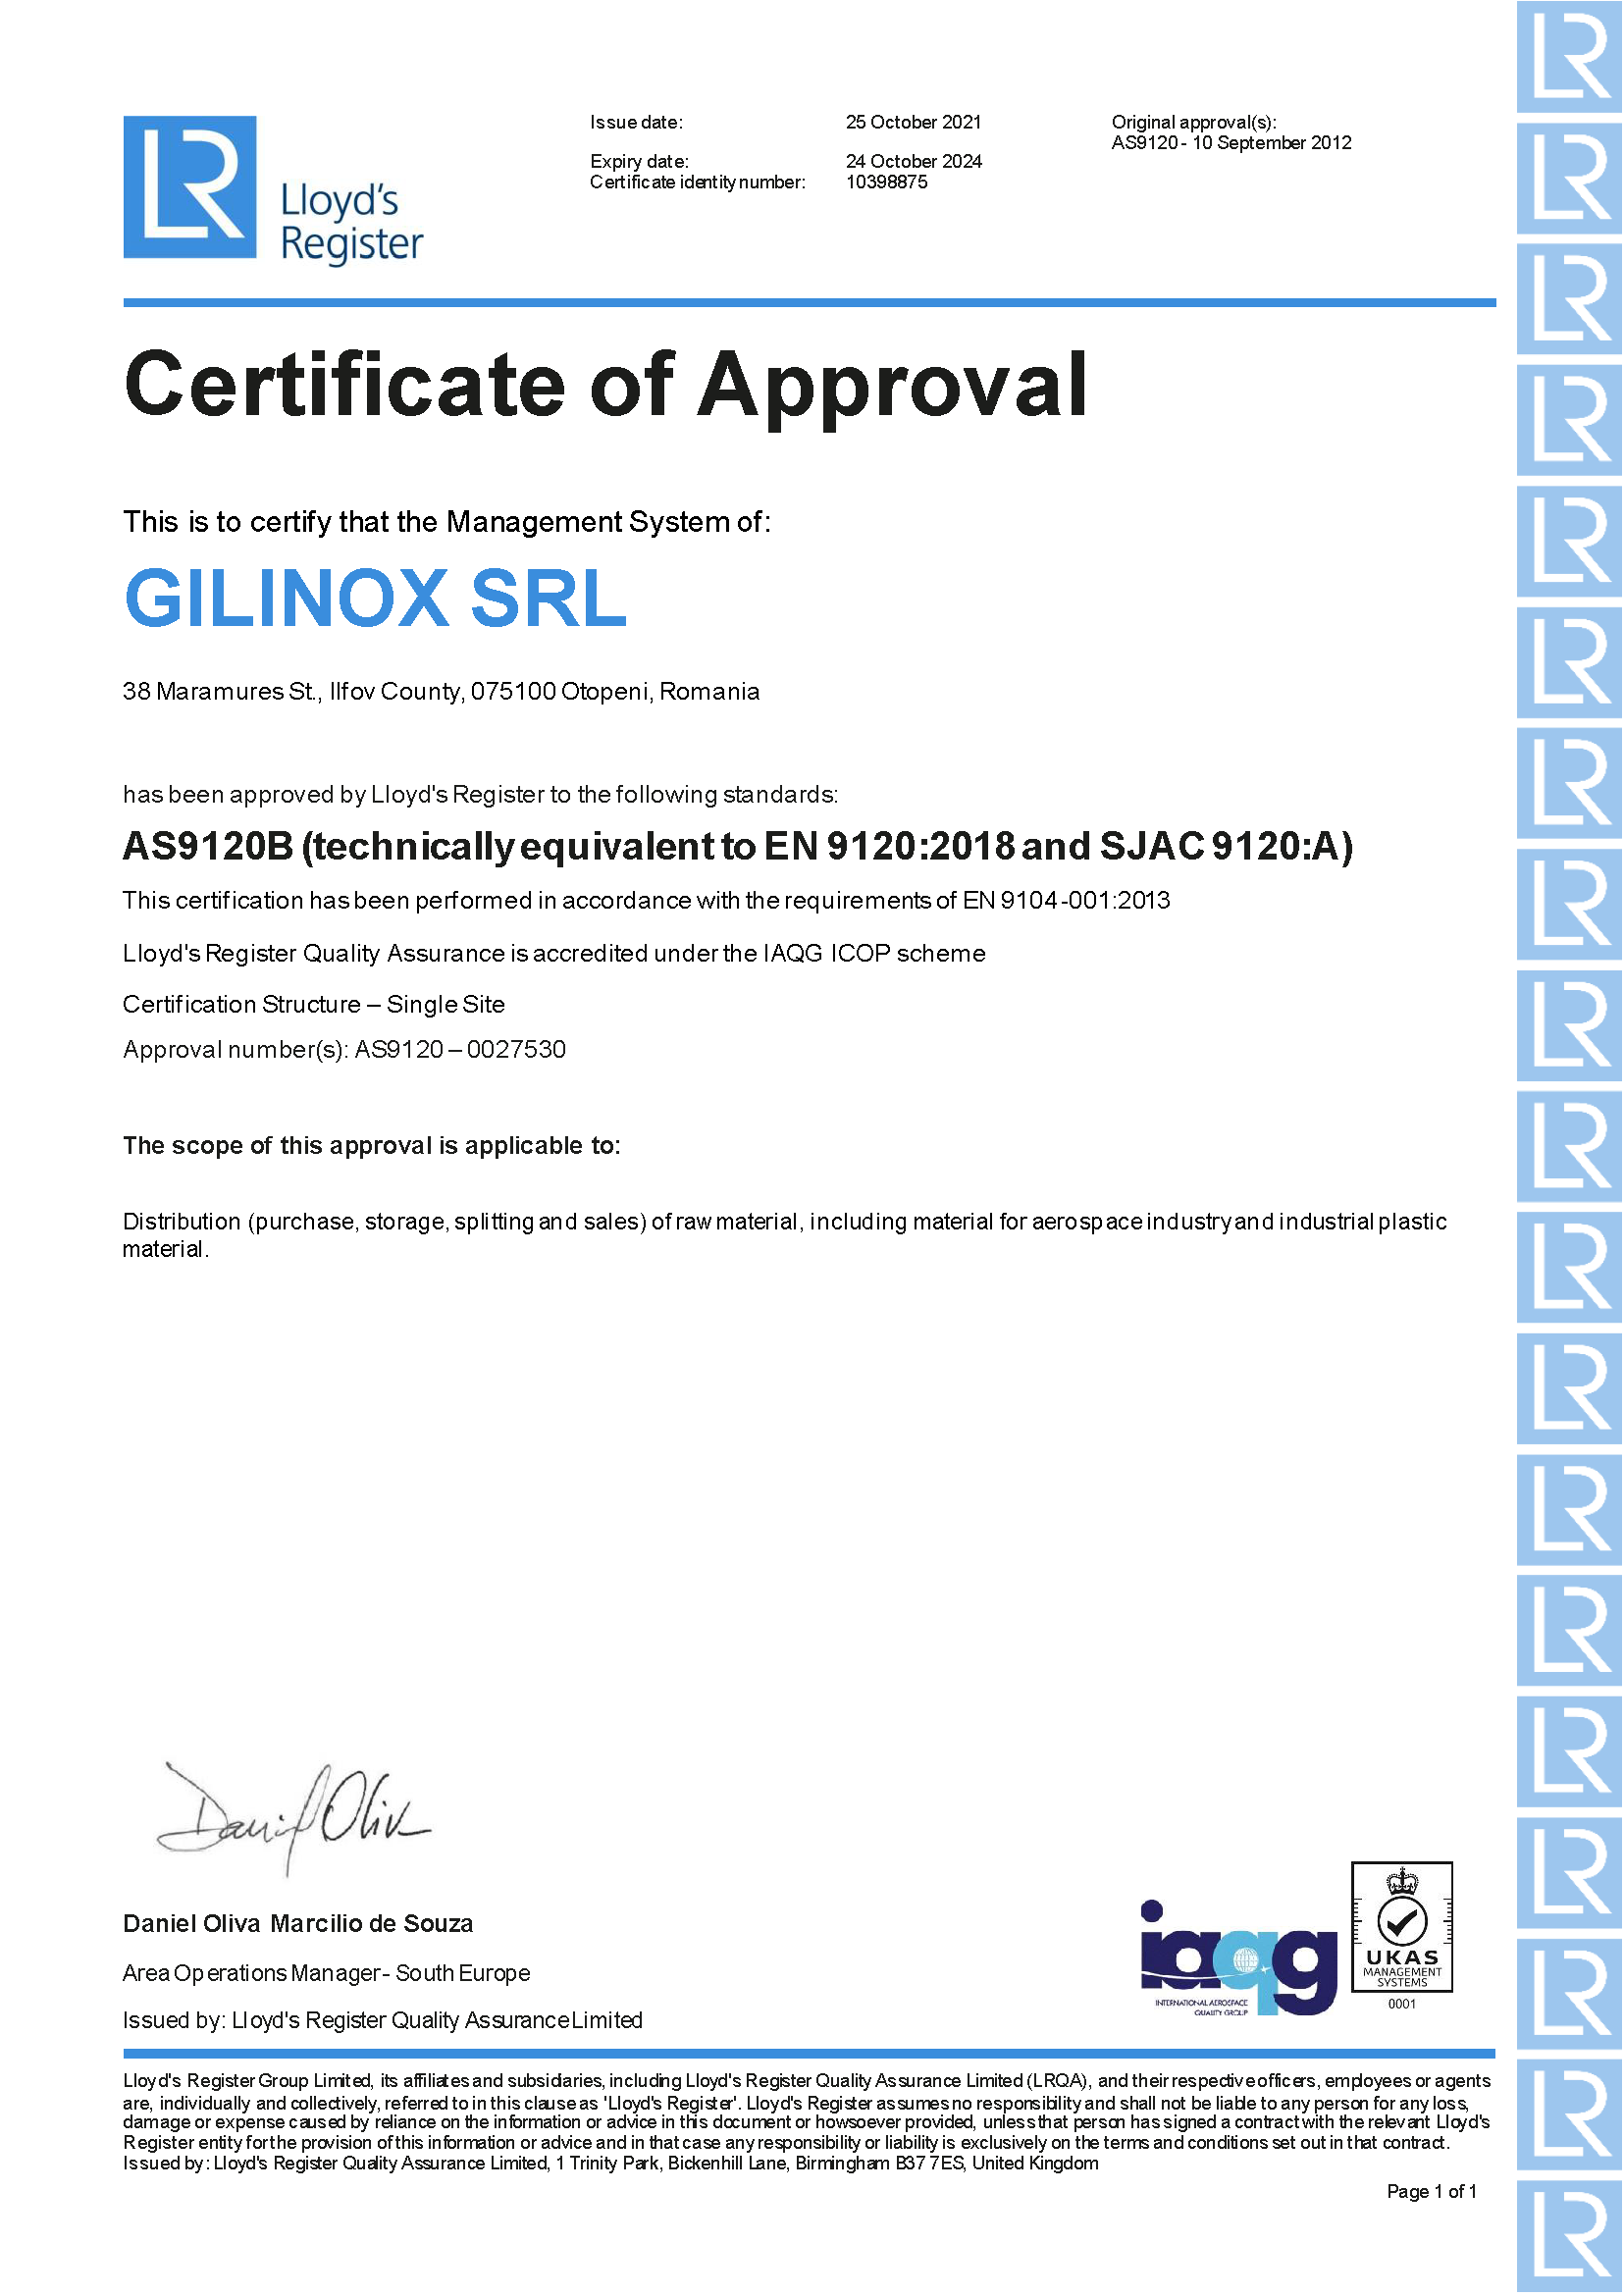 Certificat AS 9120B (echivalent din punct de vedere tehnic cu EN 9120:2018 și SJAC 9120:A)